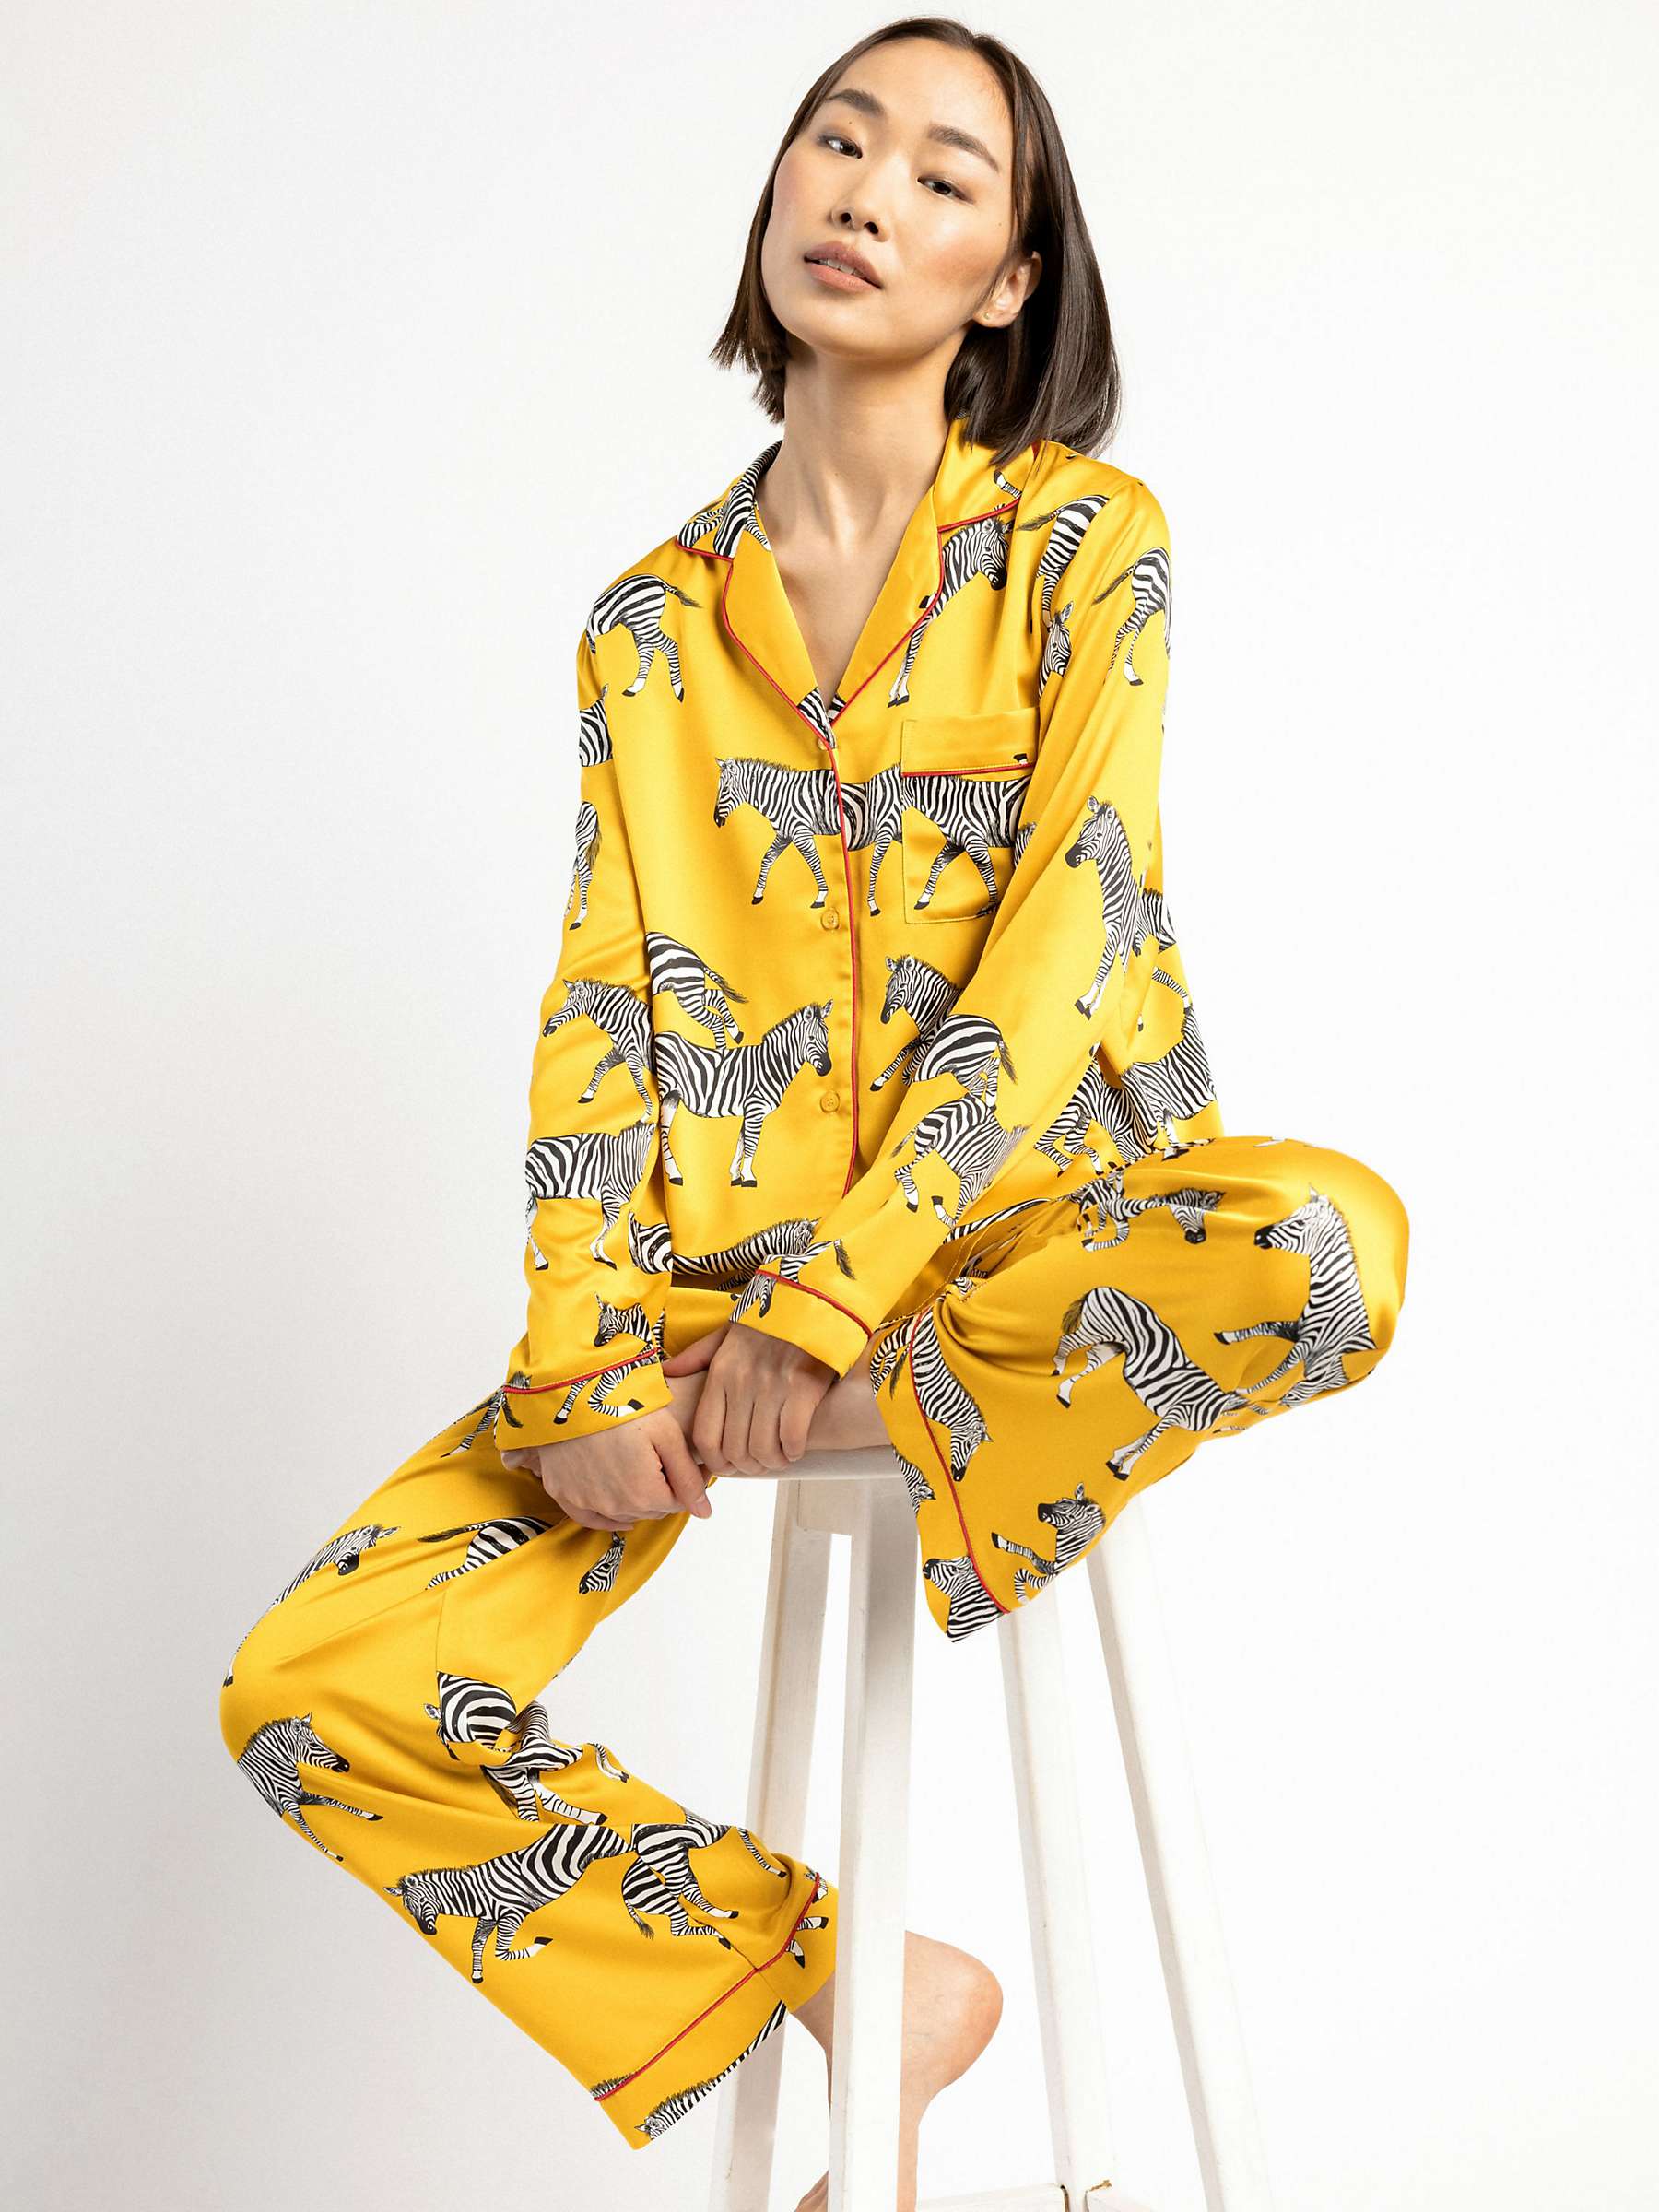 Buy Chelsea Peers Zebra Long Shirt Satin Pyjama Set Online at johnlewis.com